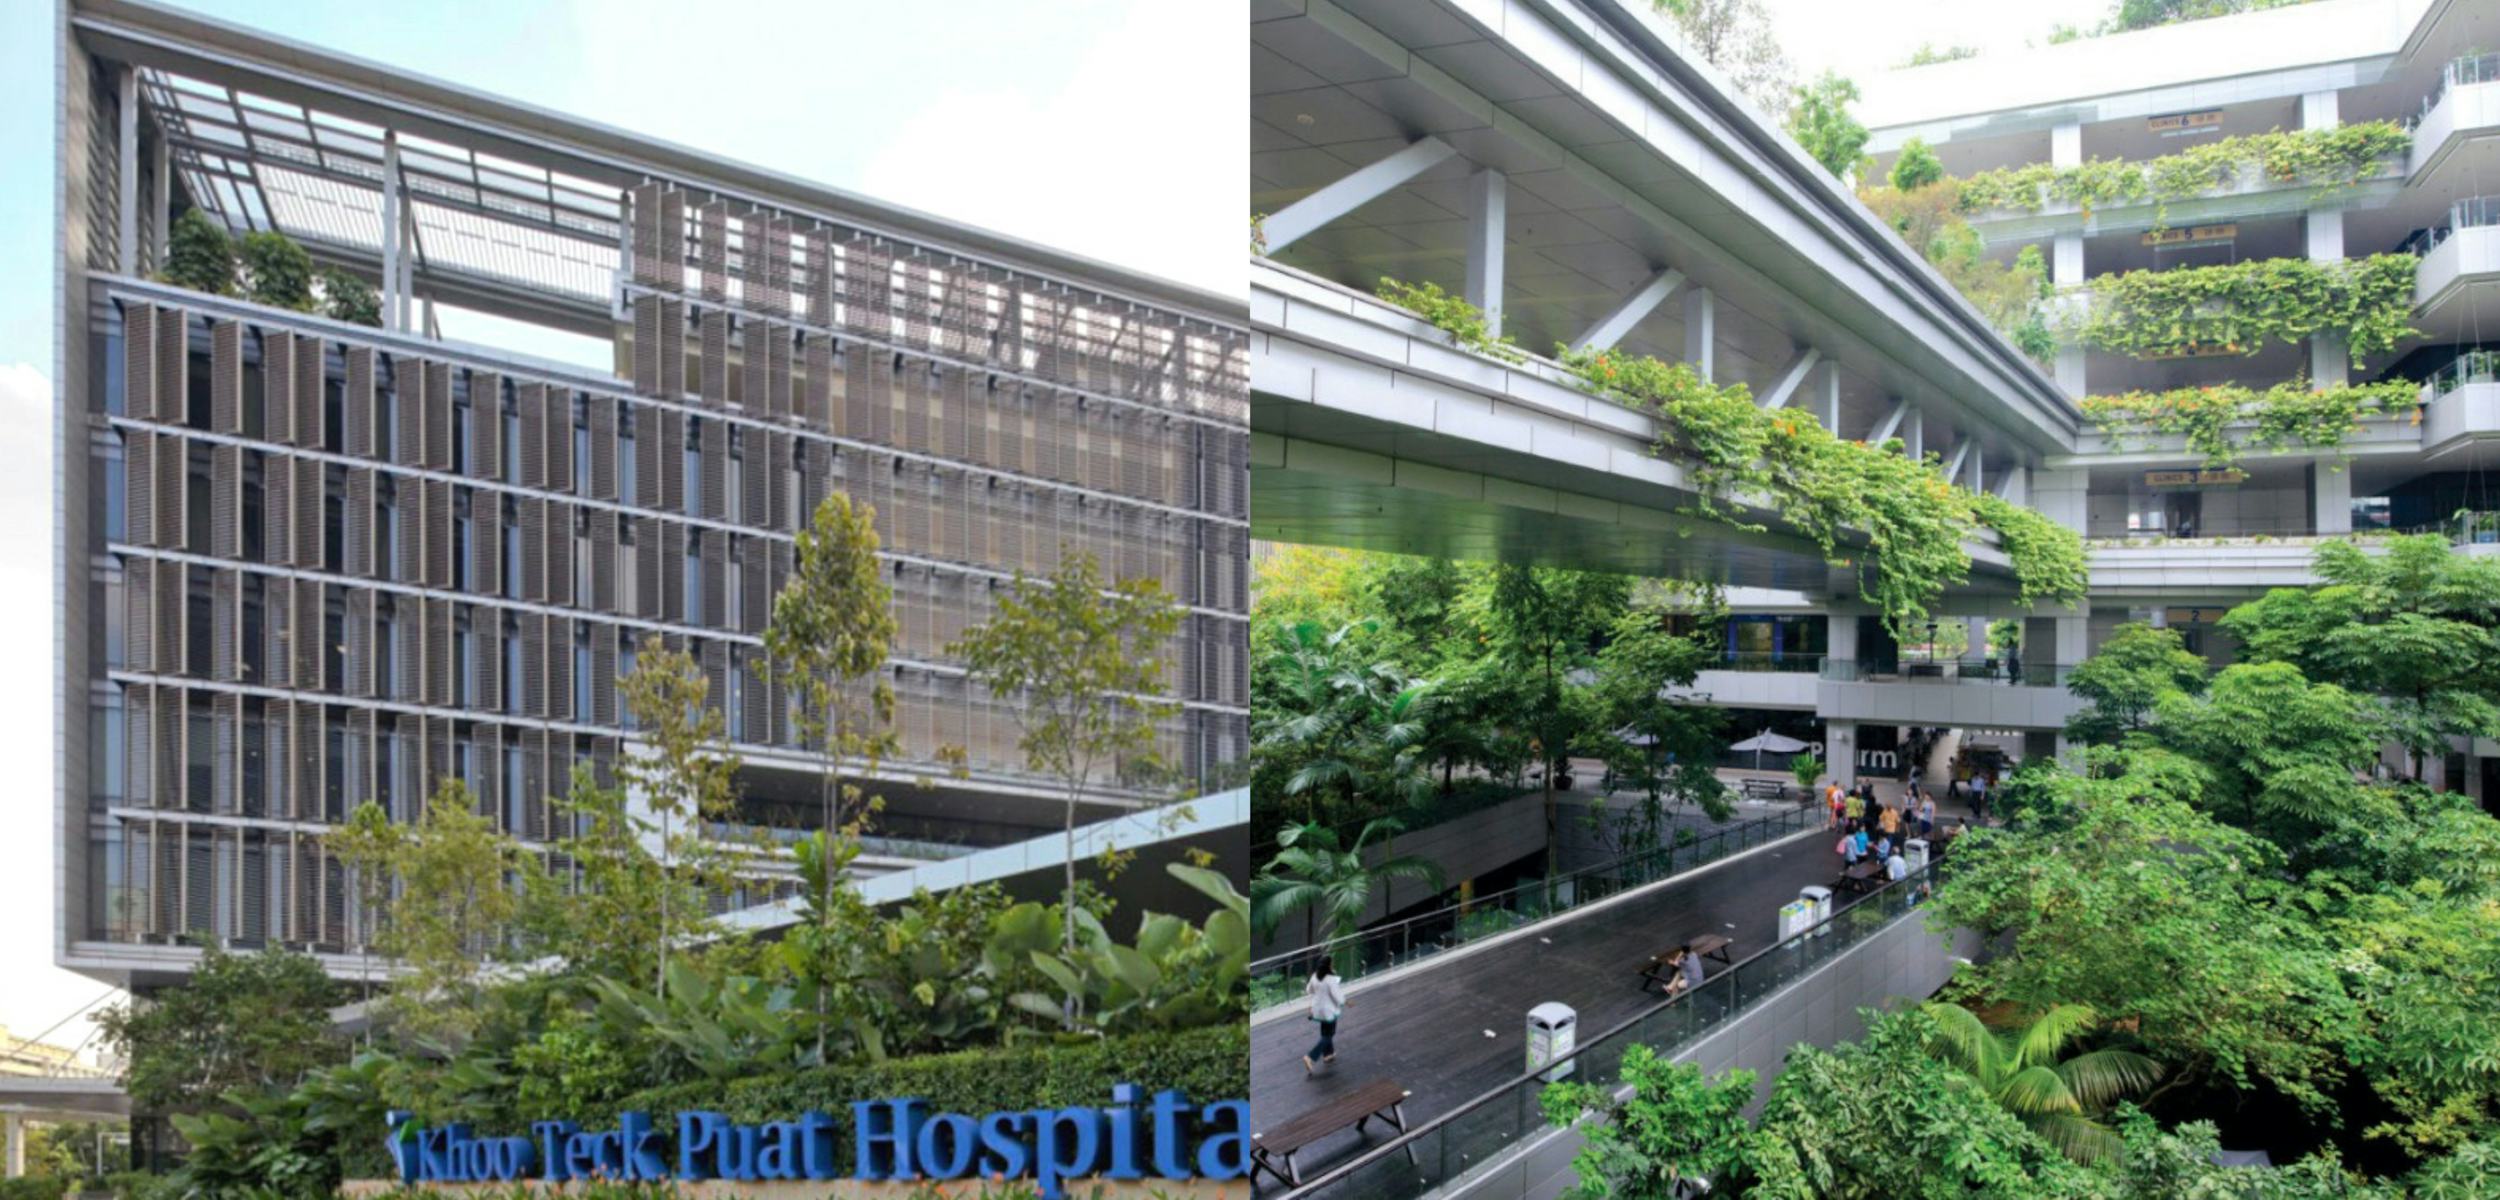 Khoo Teck Puat Hospital, Yishun, Singapore